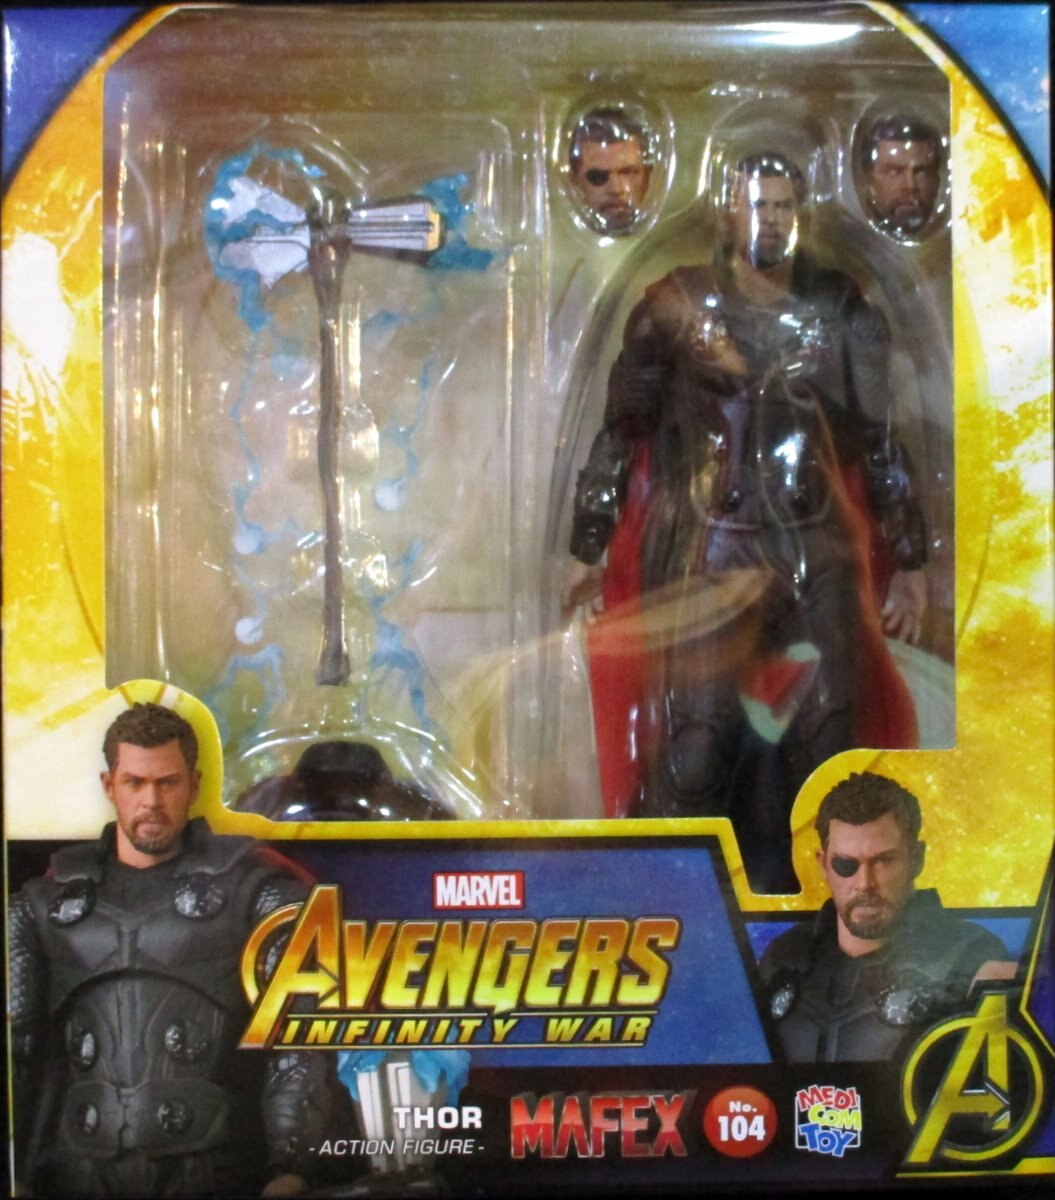 Medicom Avengers: Infinity War MAFEX No.104 Thor Action Figure